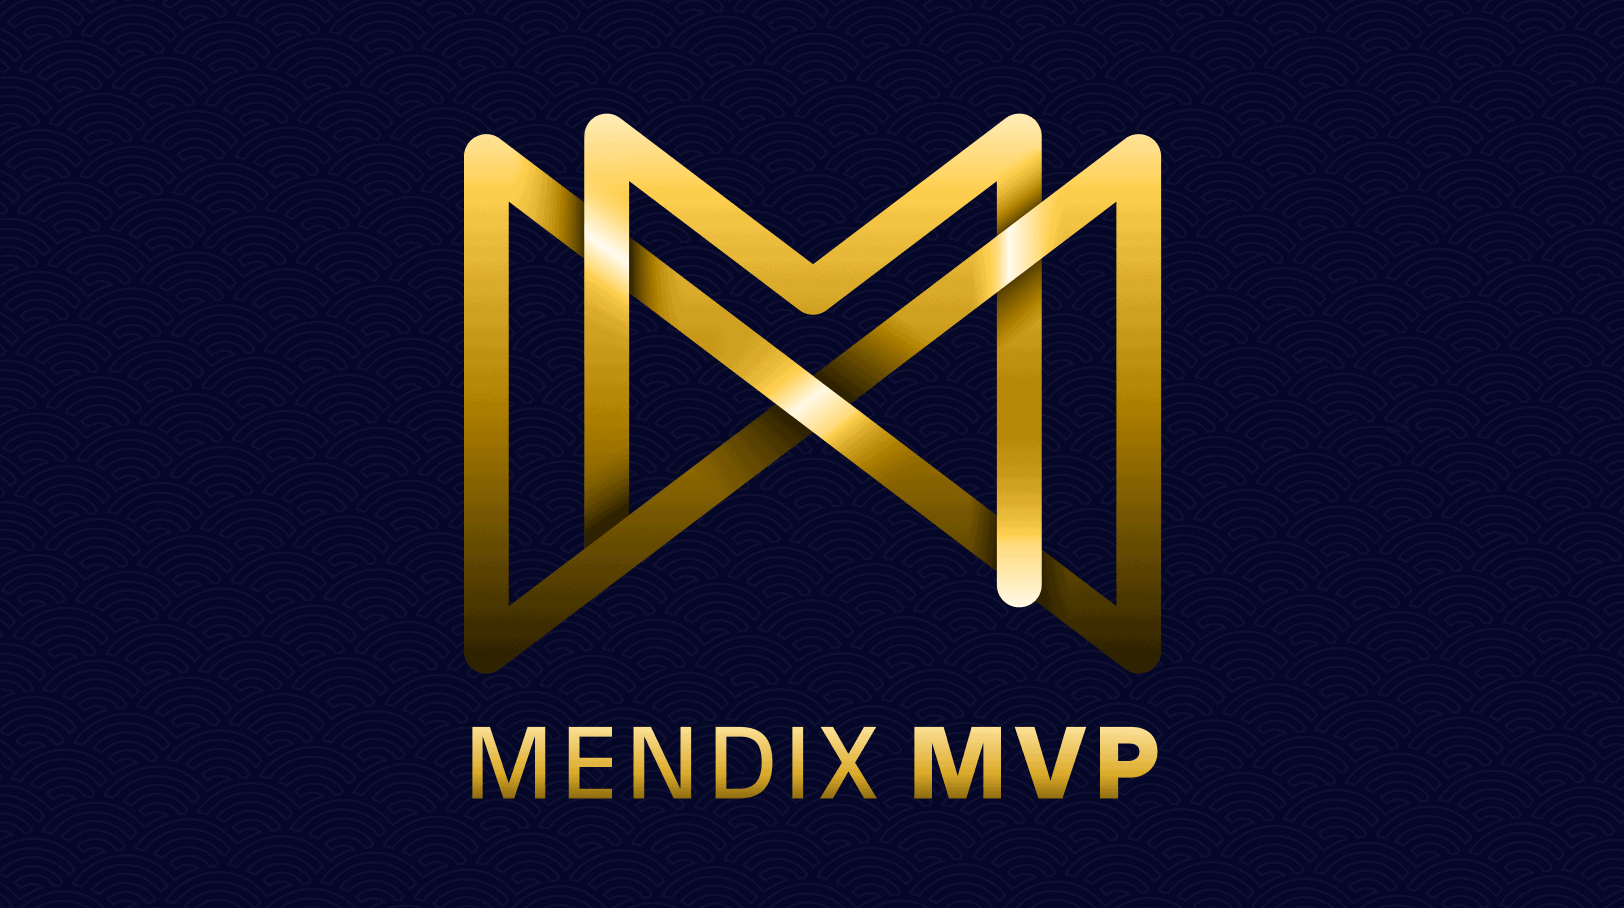 New Mendix MVP Announcement